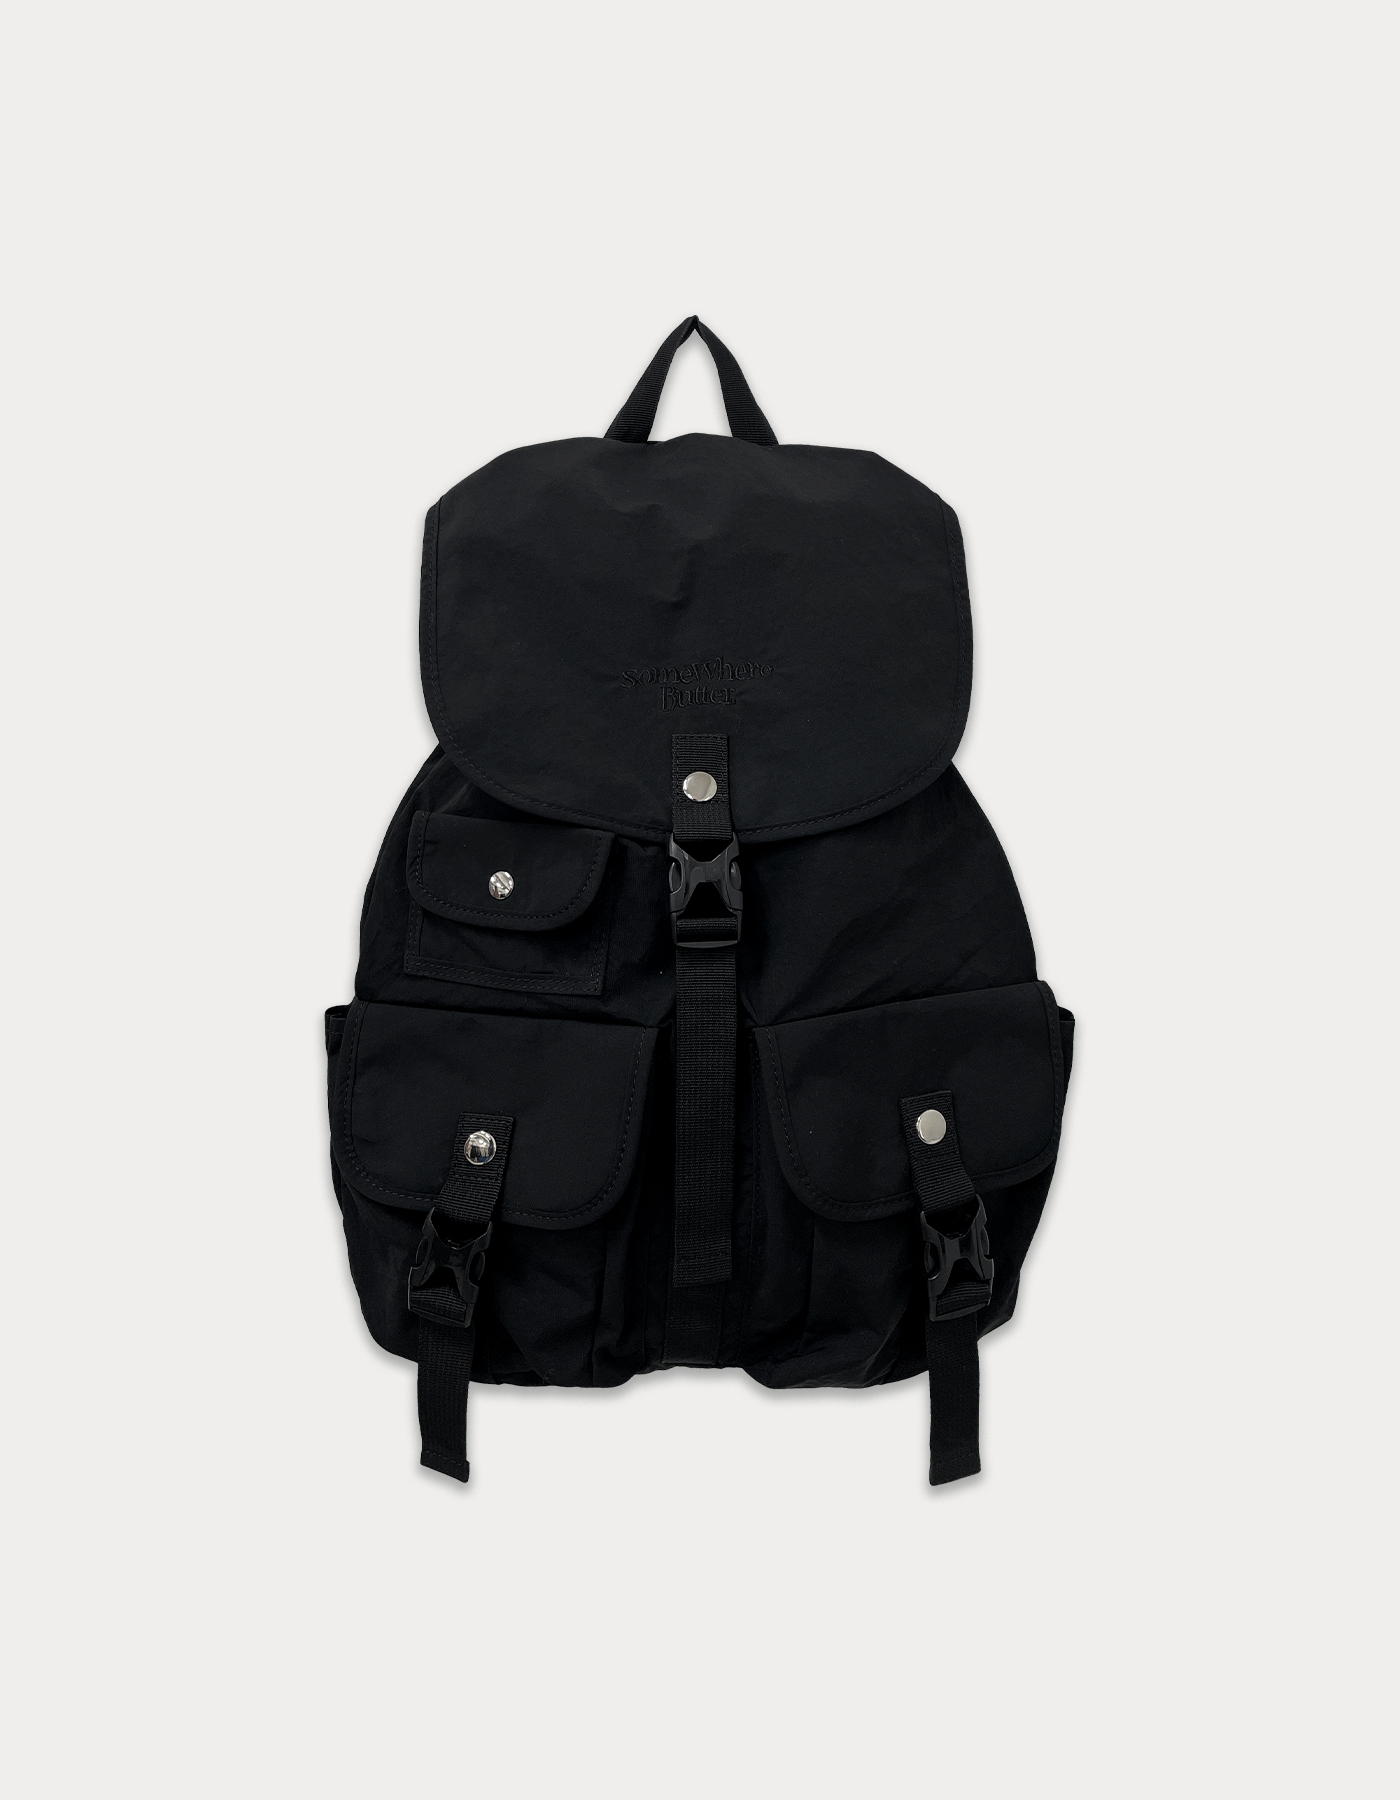 PP Backpack - black